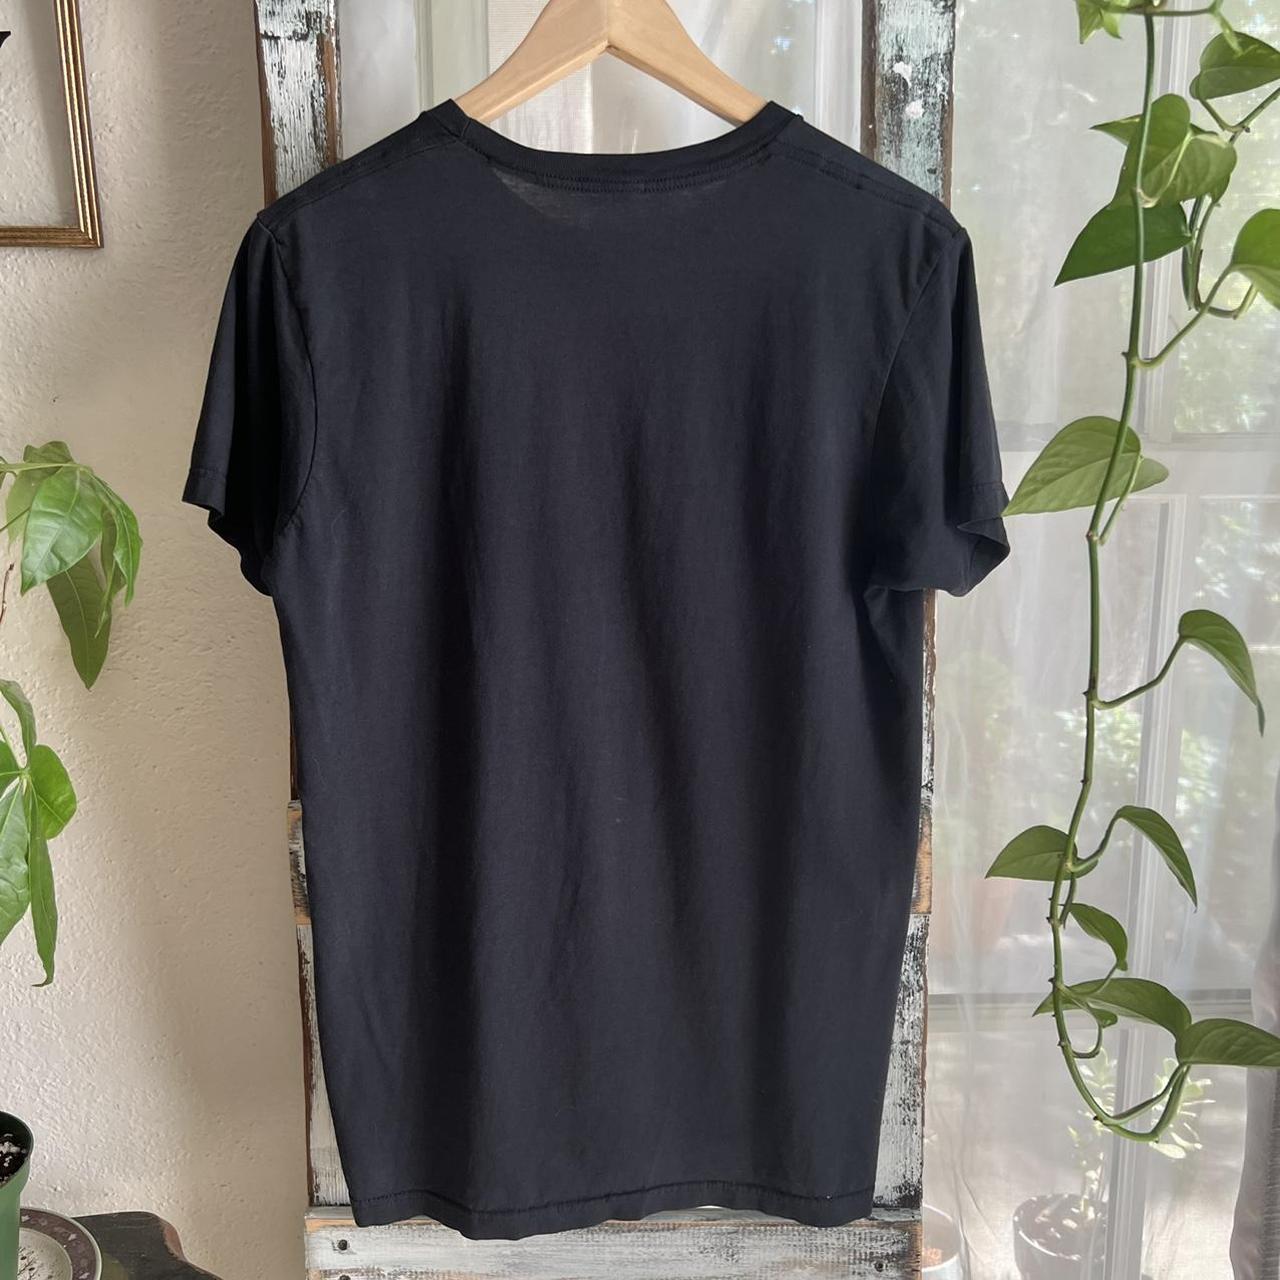 Hawke & Co. Women's Grey and Black T-shirt (3)